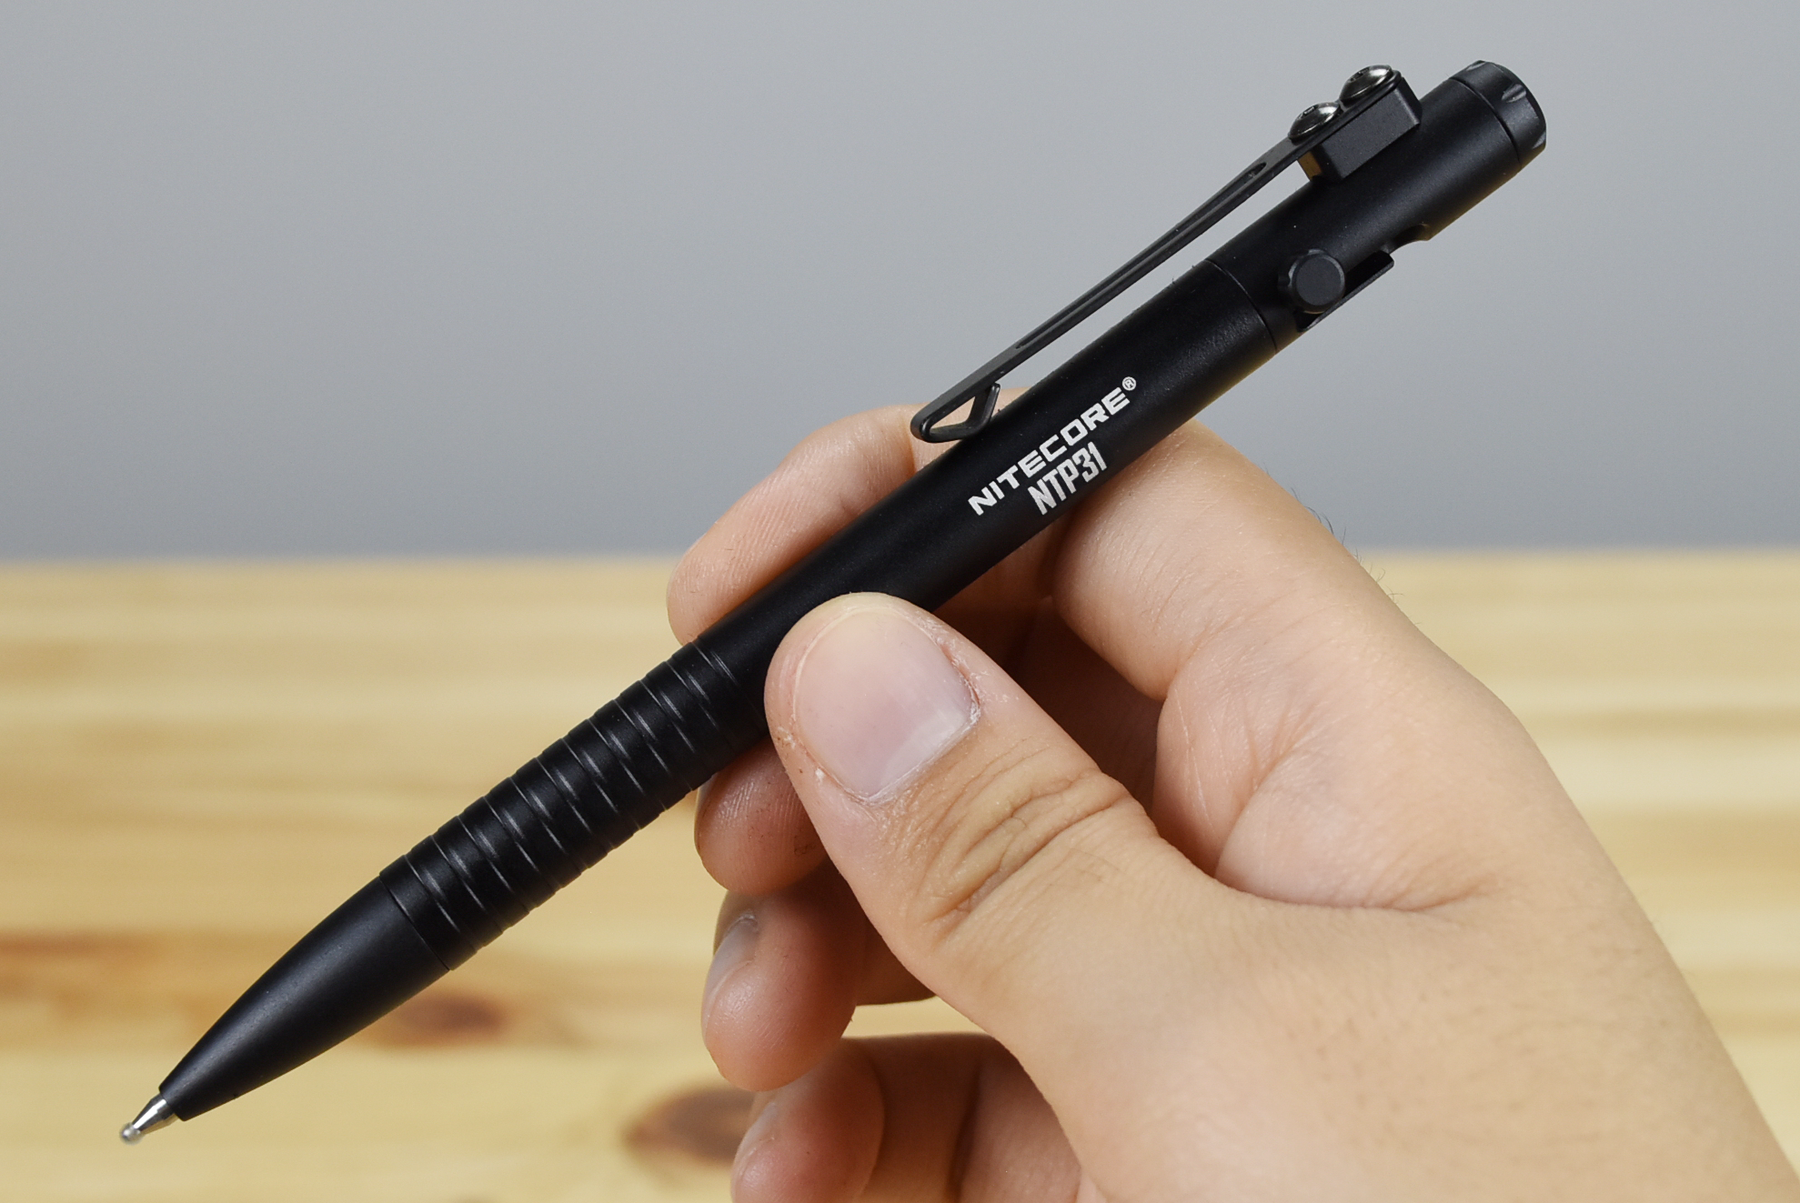 Nitecore NTP31 Multifunctional Bolt Action Tactical Pen